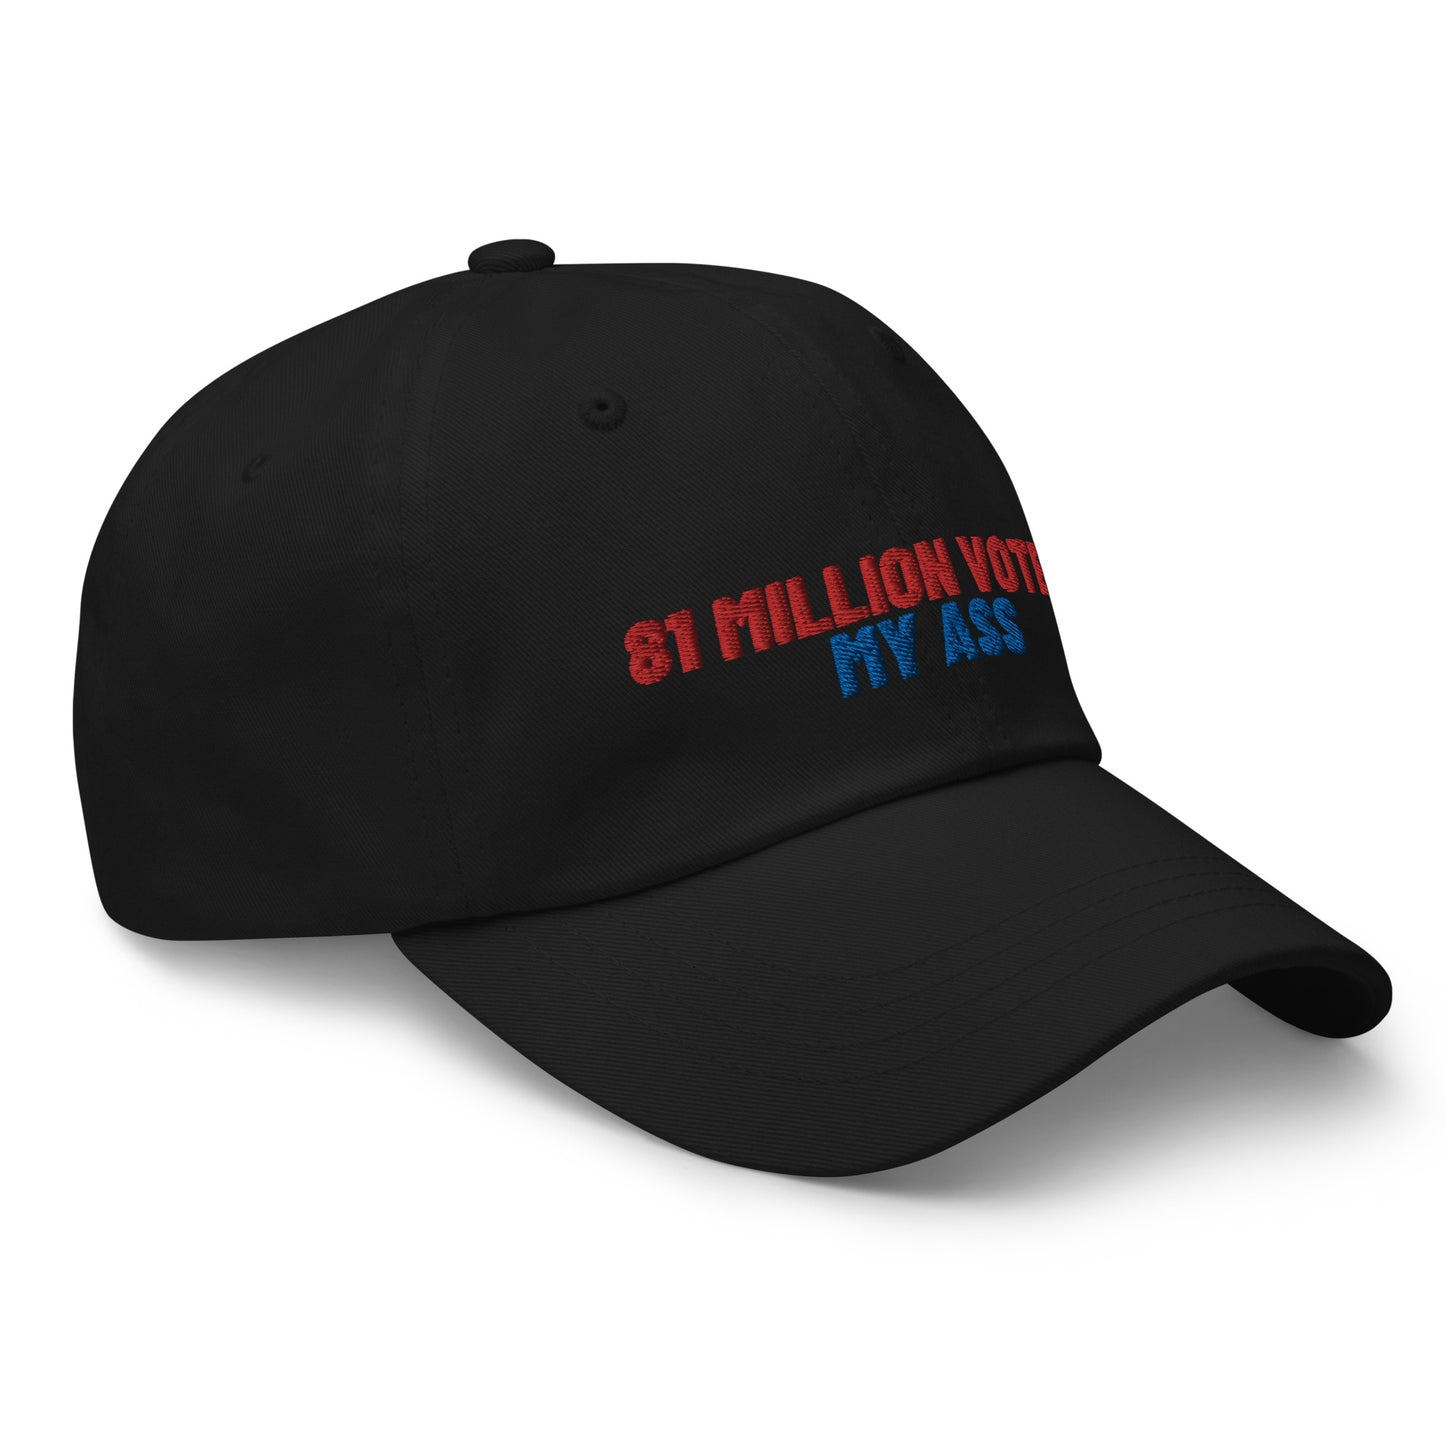 81 Million Votes, My Ass Hat (Black)